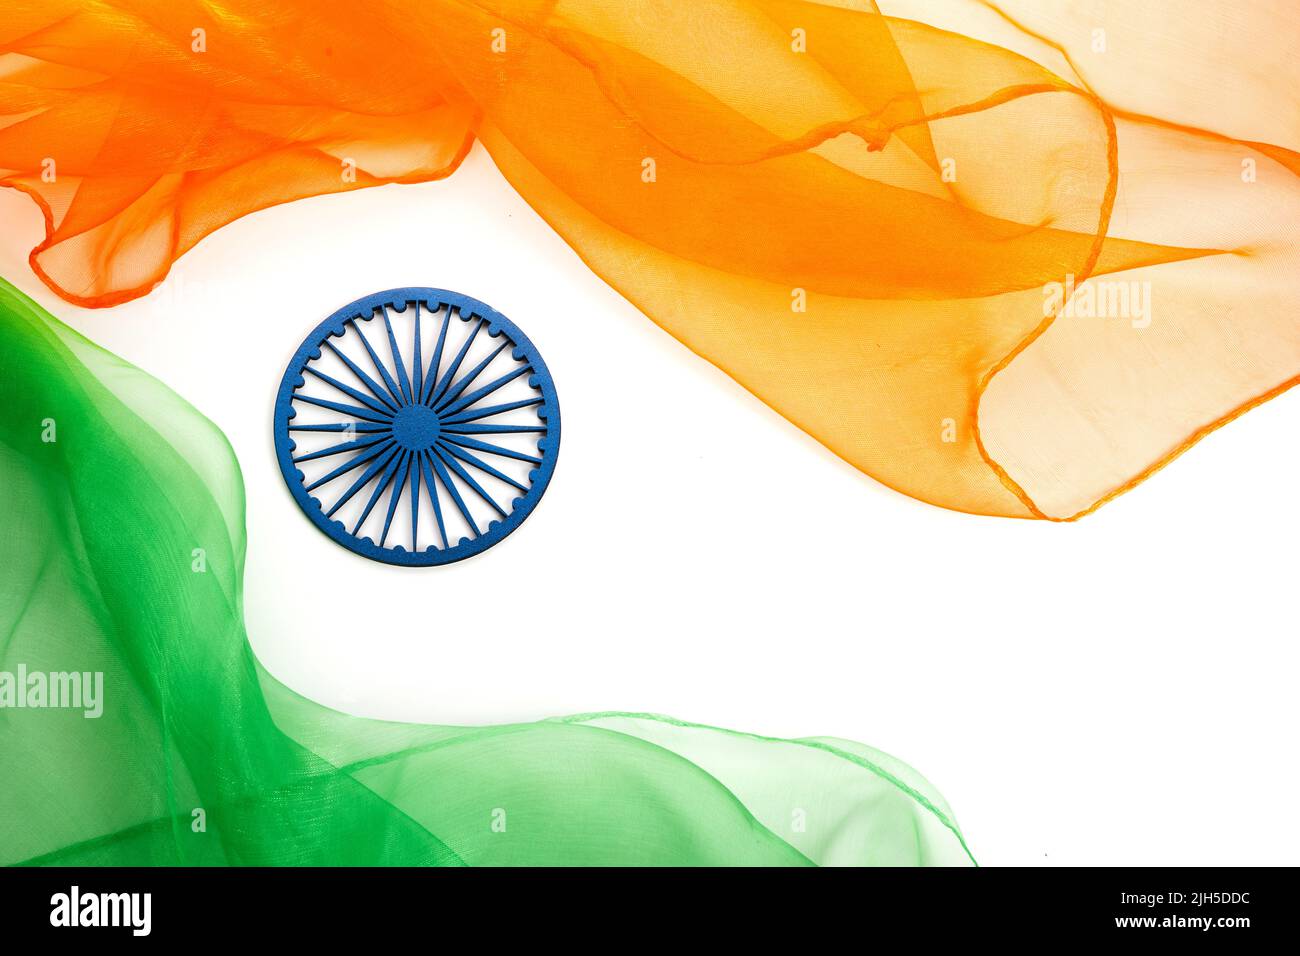 Indian Independence Day Konzept Hintergrund mit Ashoka-Rad. Stockfoto